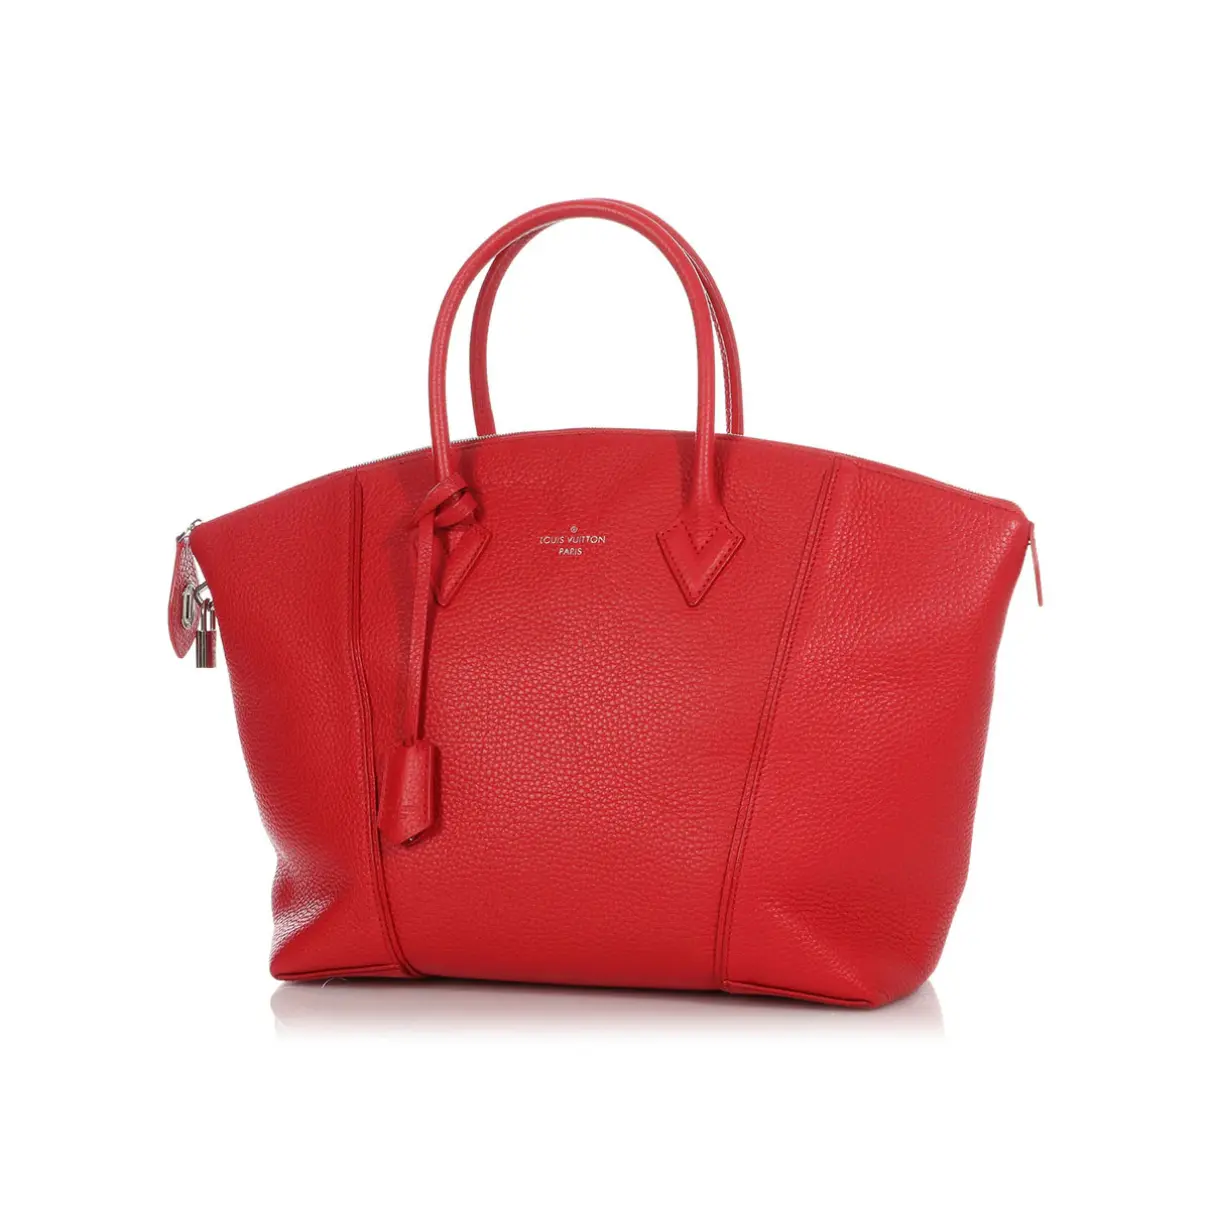 Buy Louis Vuitton Lockit leather satchel online